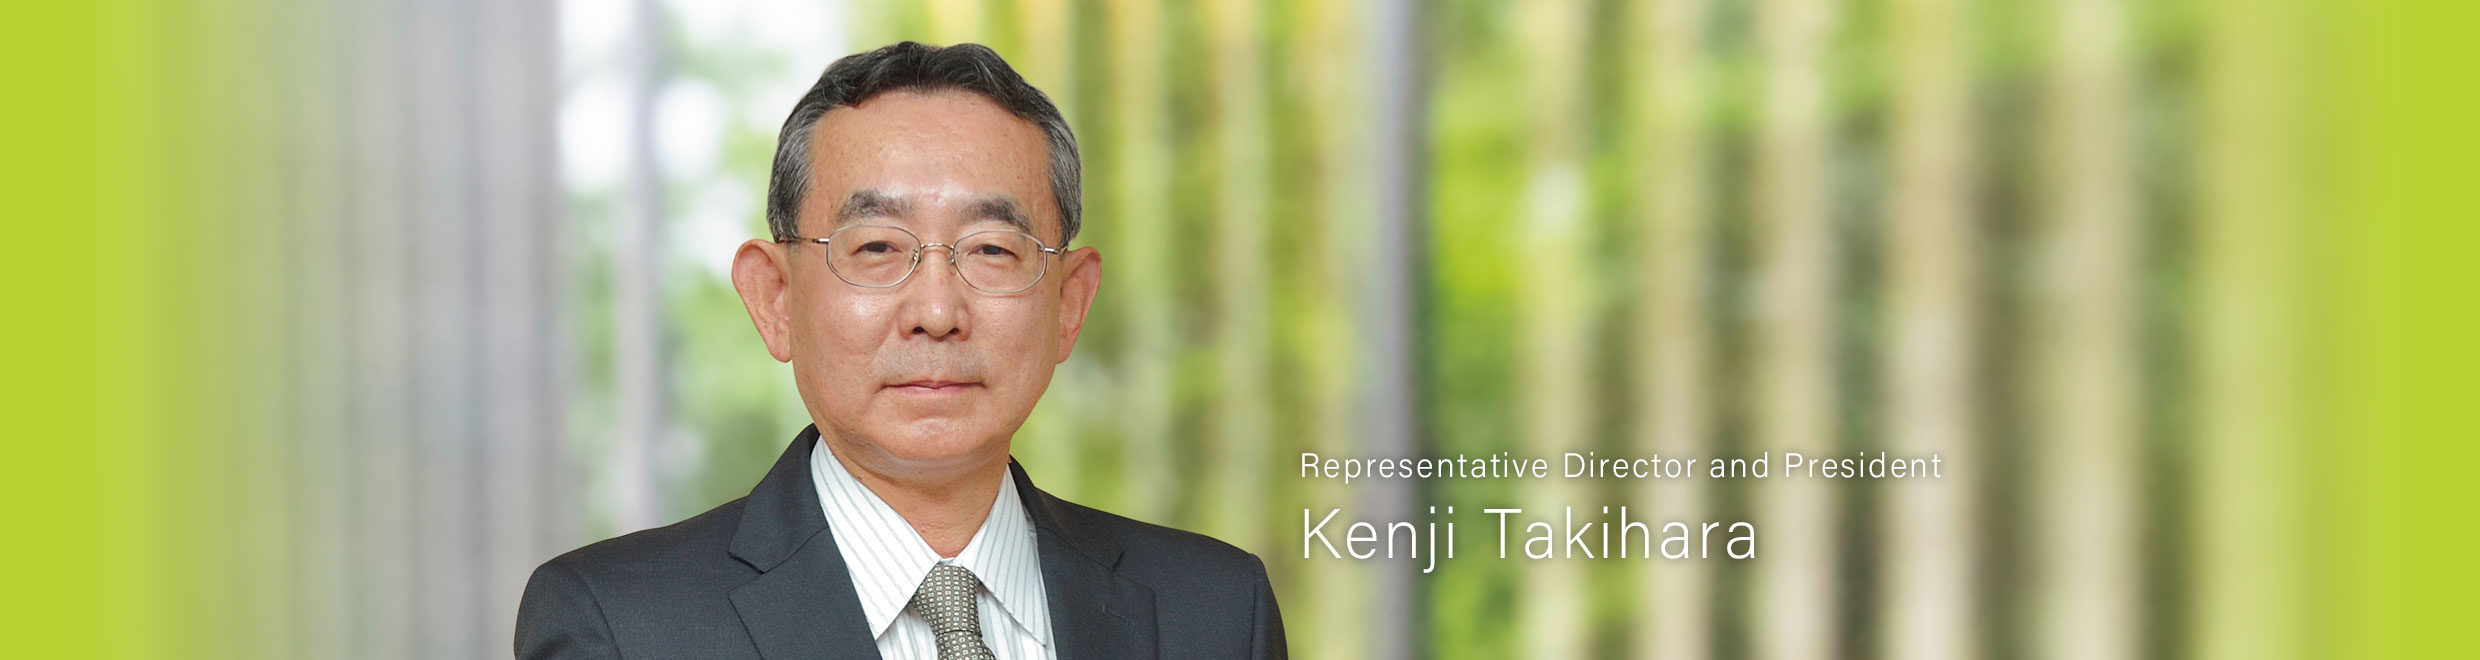 Kenji Takihara, Representative Director and President, Nisshin Seifun Group Inc.